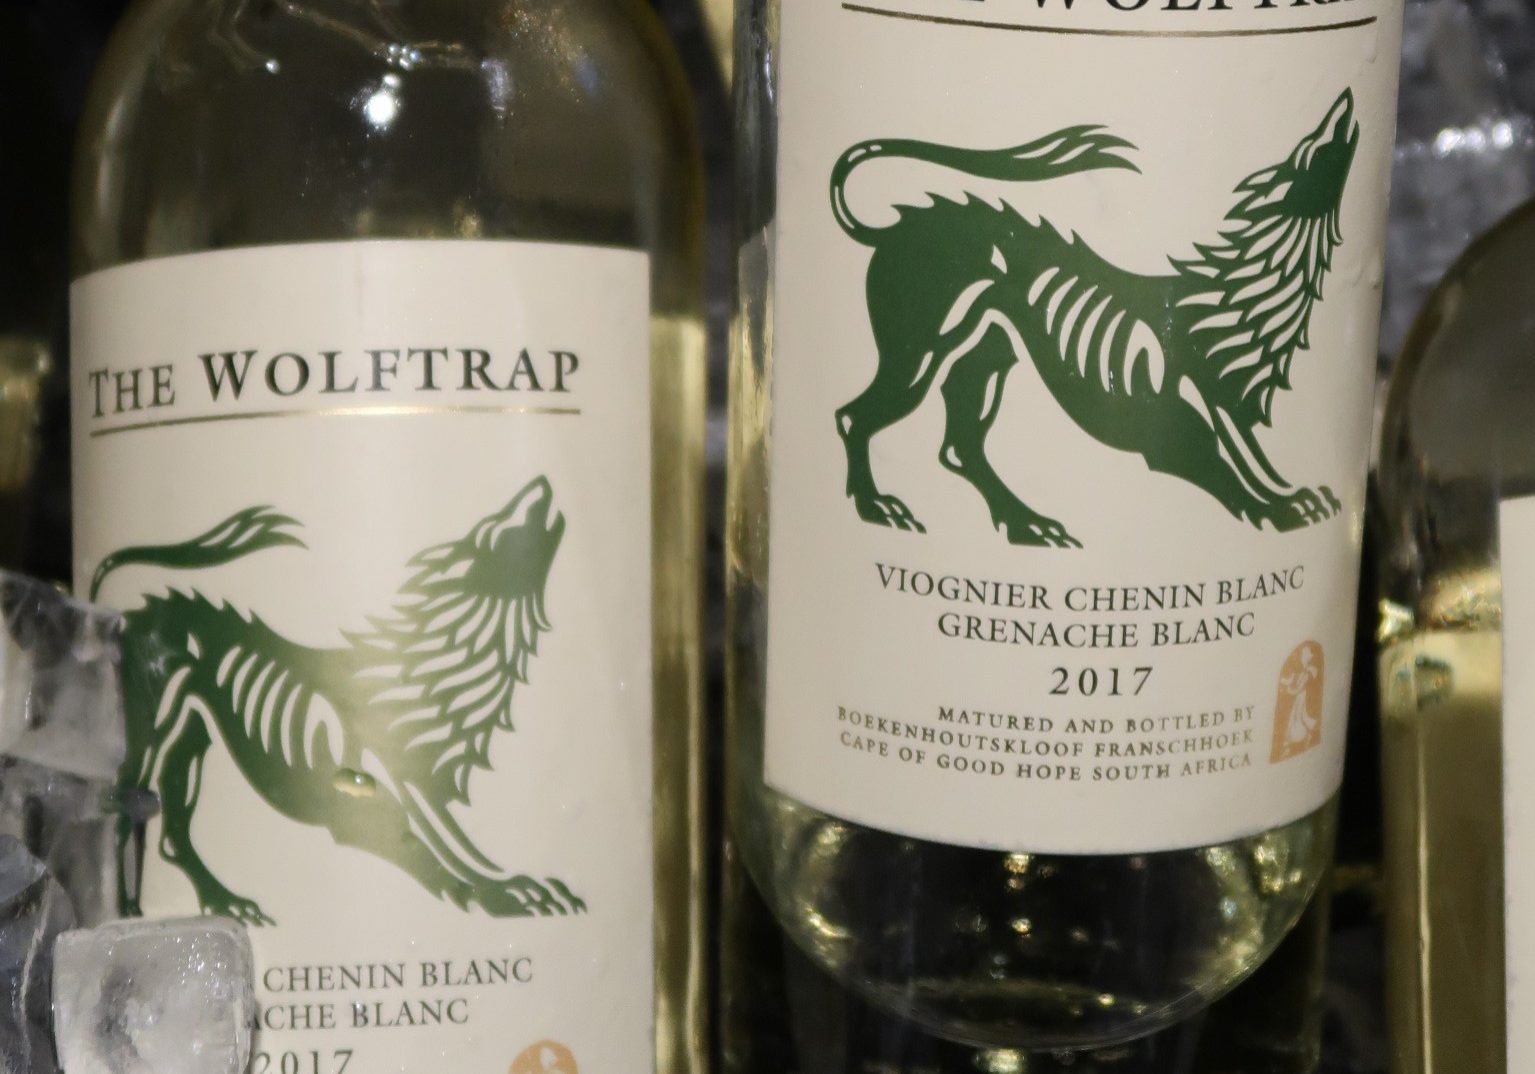 Univins & Spirits The Wolftrap Viognier Chenin Blanc 2017 Burlington Wine Club tasting May 2019